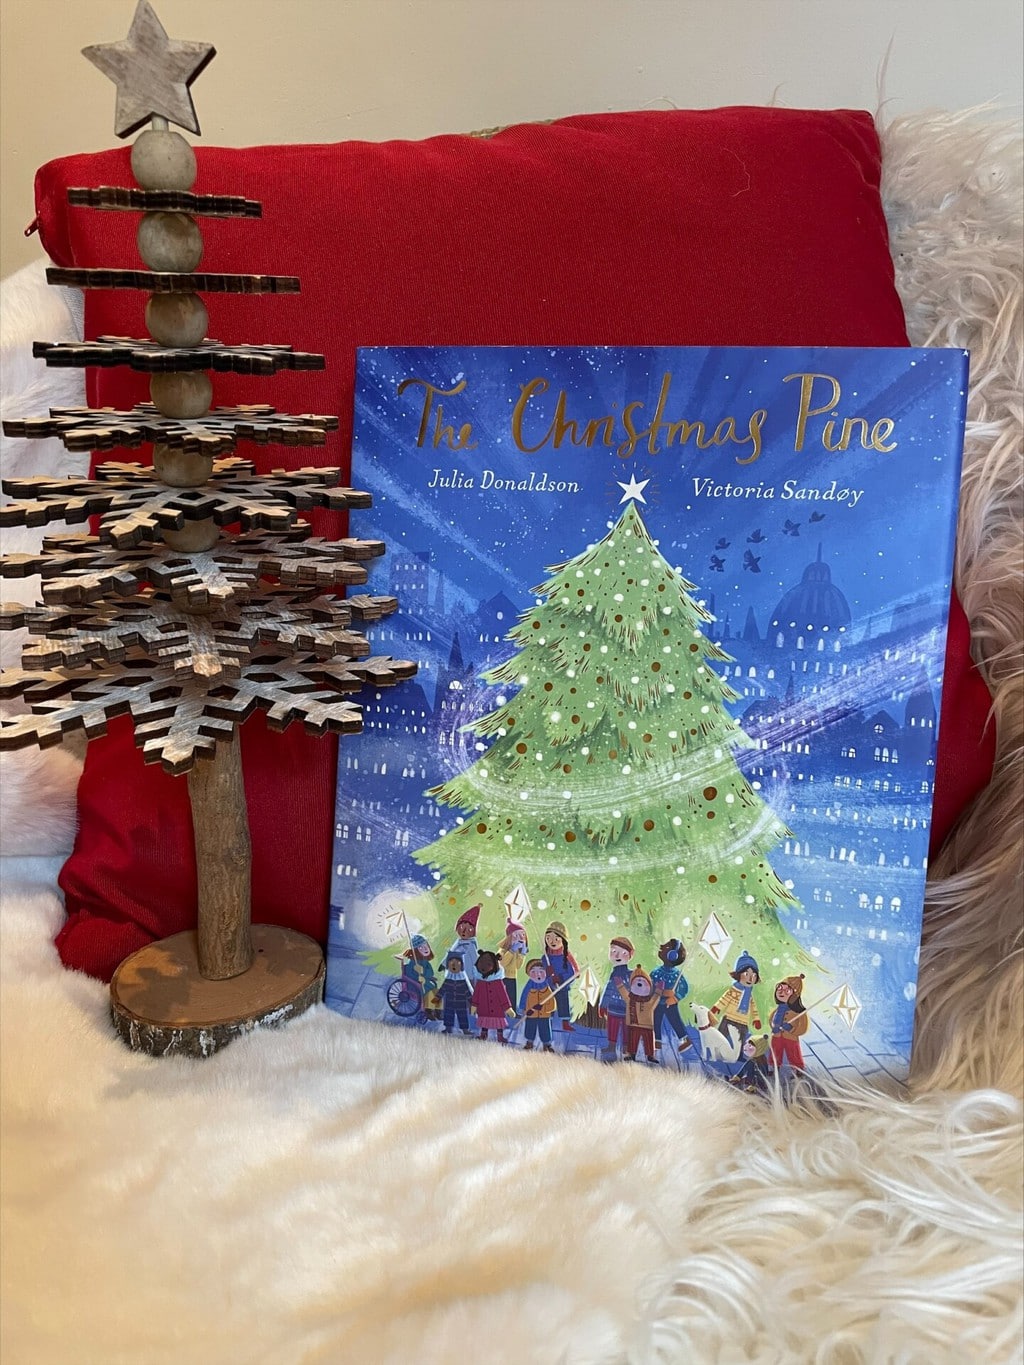 The Christmas Pine – Julia Donaldson (author), Victoria Sandoy (illustrator), Alison Green Books (imprint of Scholastic) (publisher)